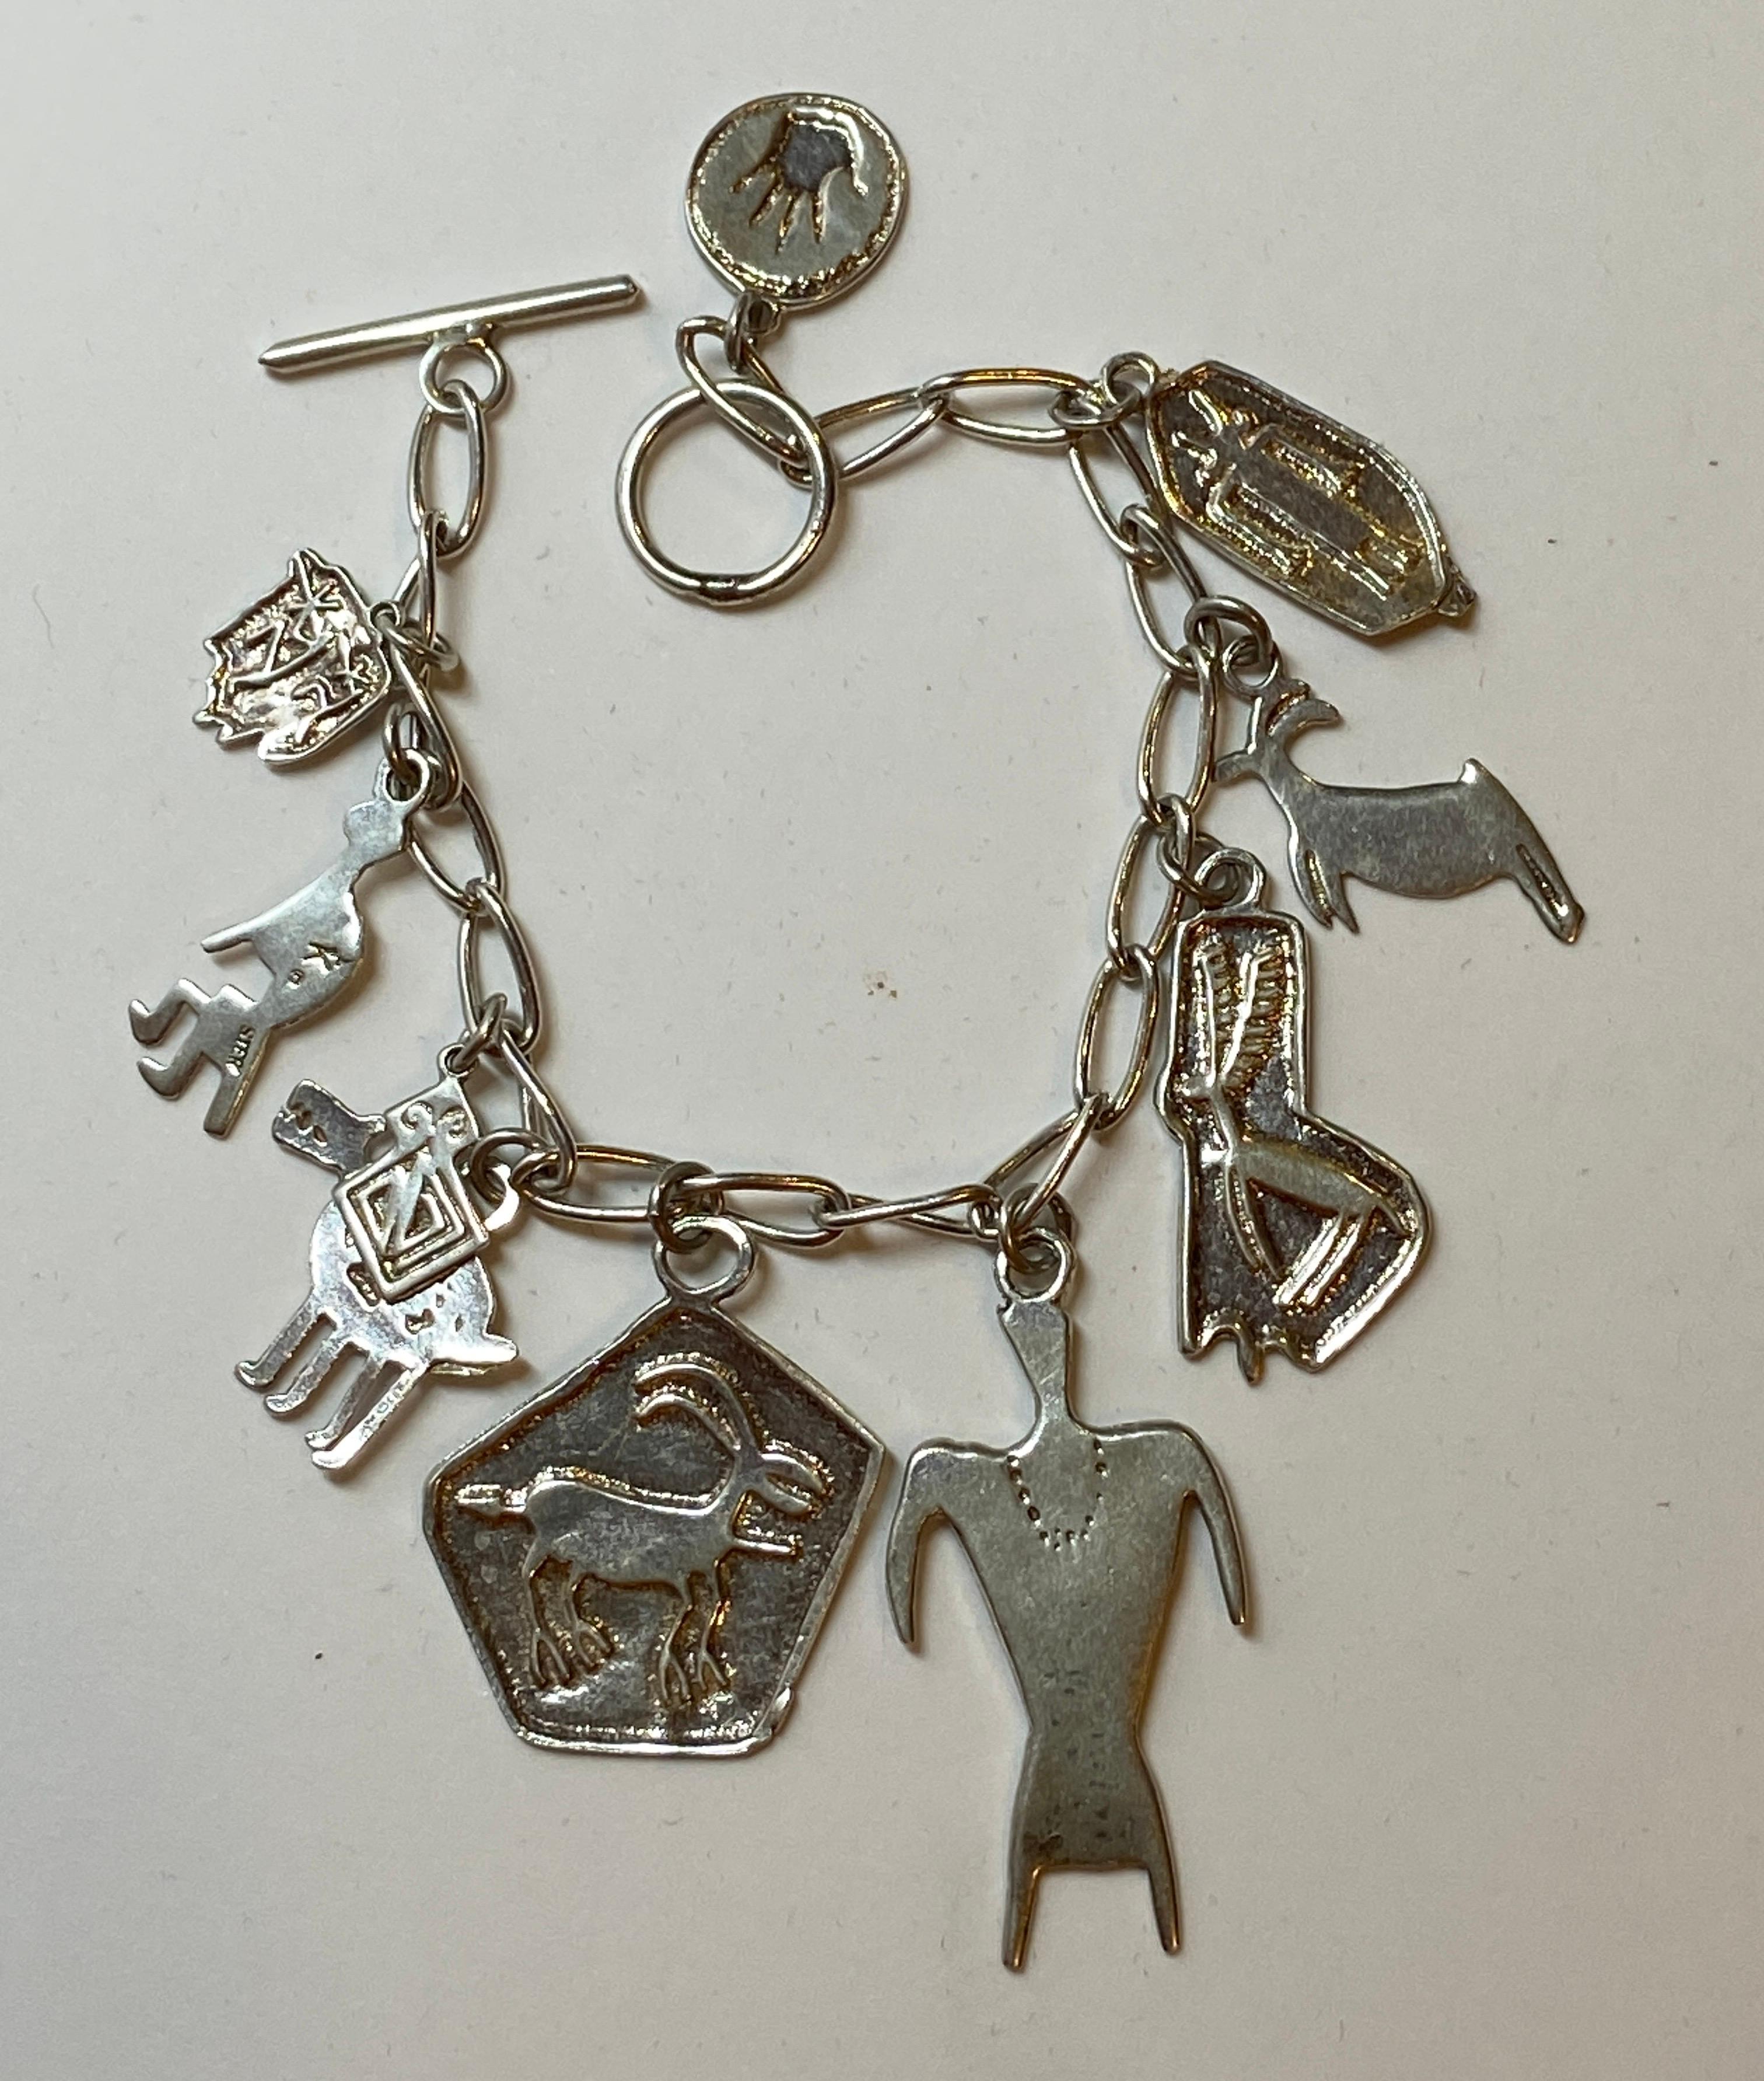 Skurrilesisches Sterlingsilber-Charm-Armband (Kunsthandwerker*in) im Angebot